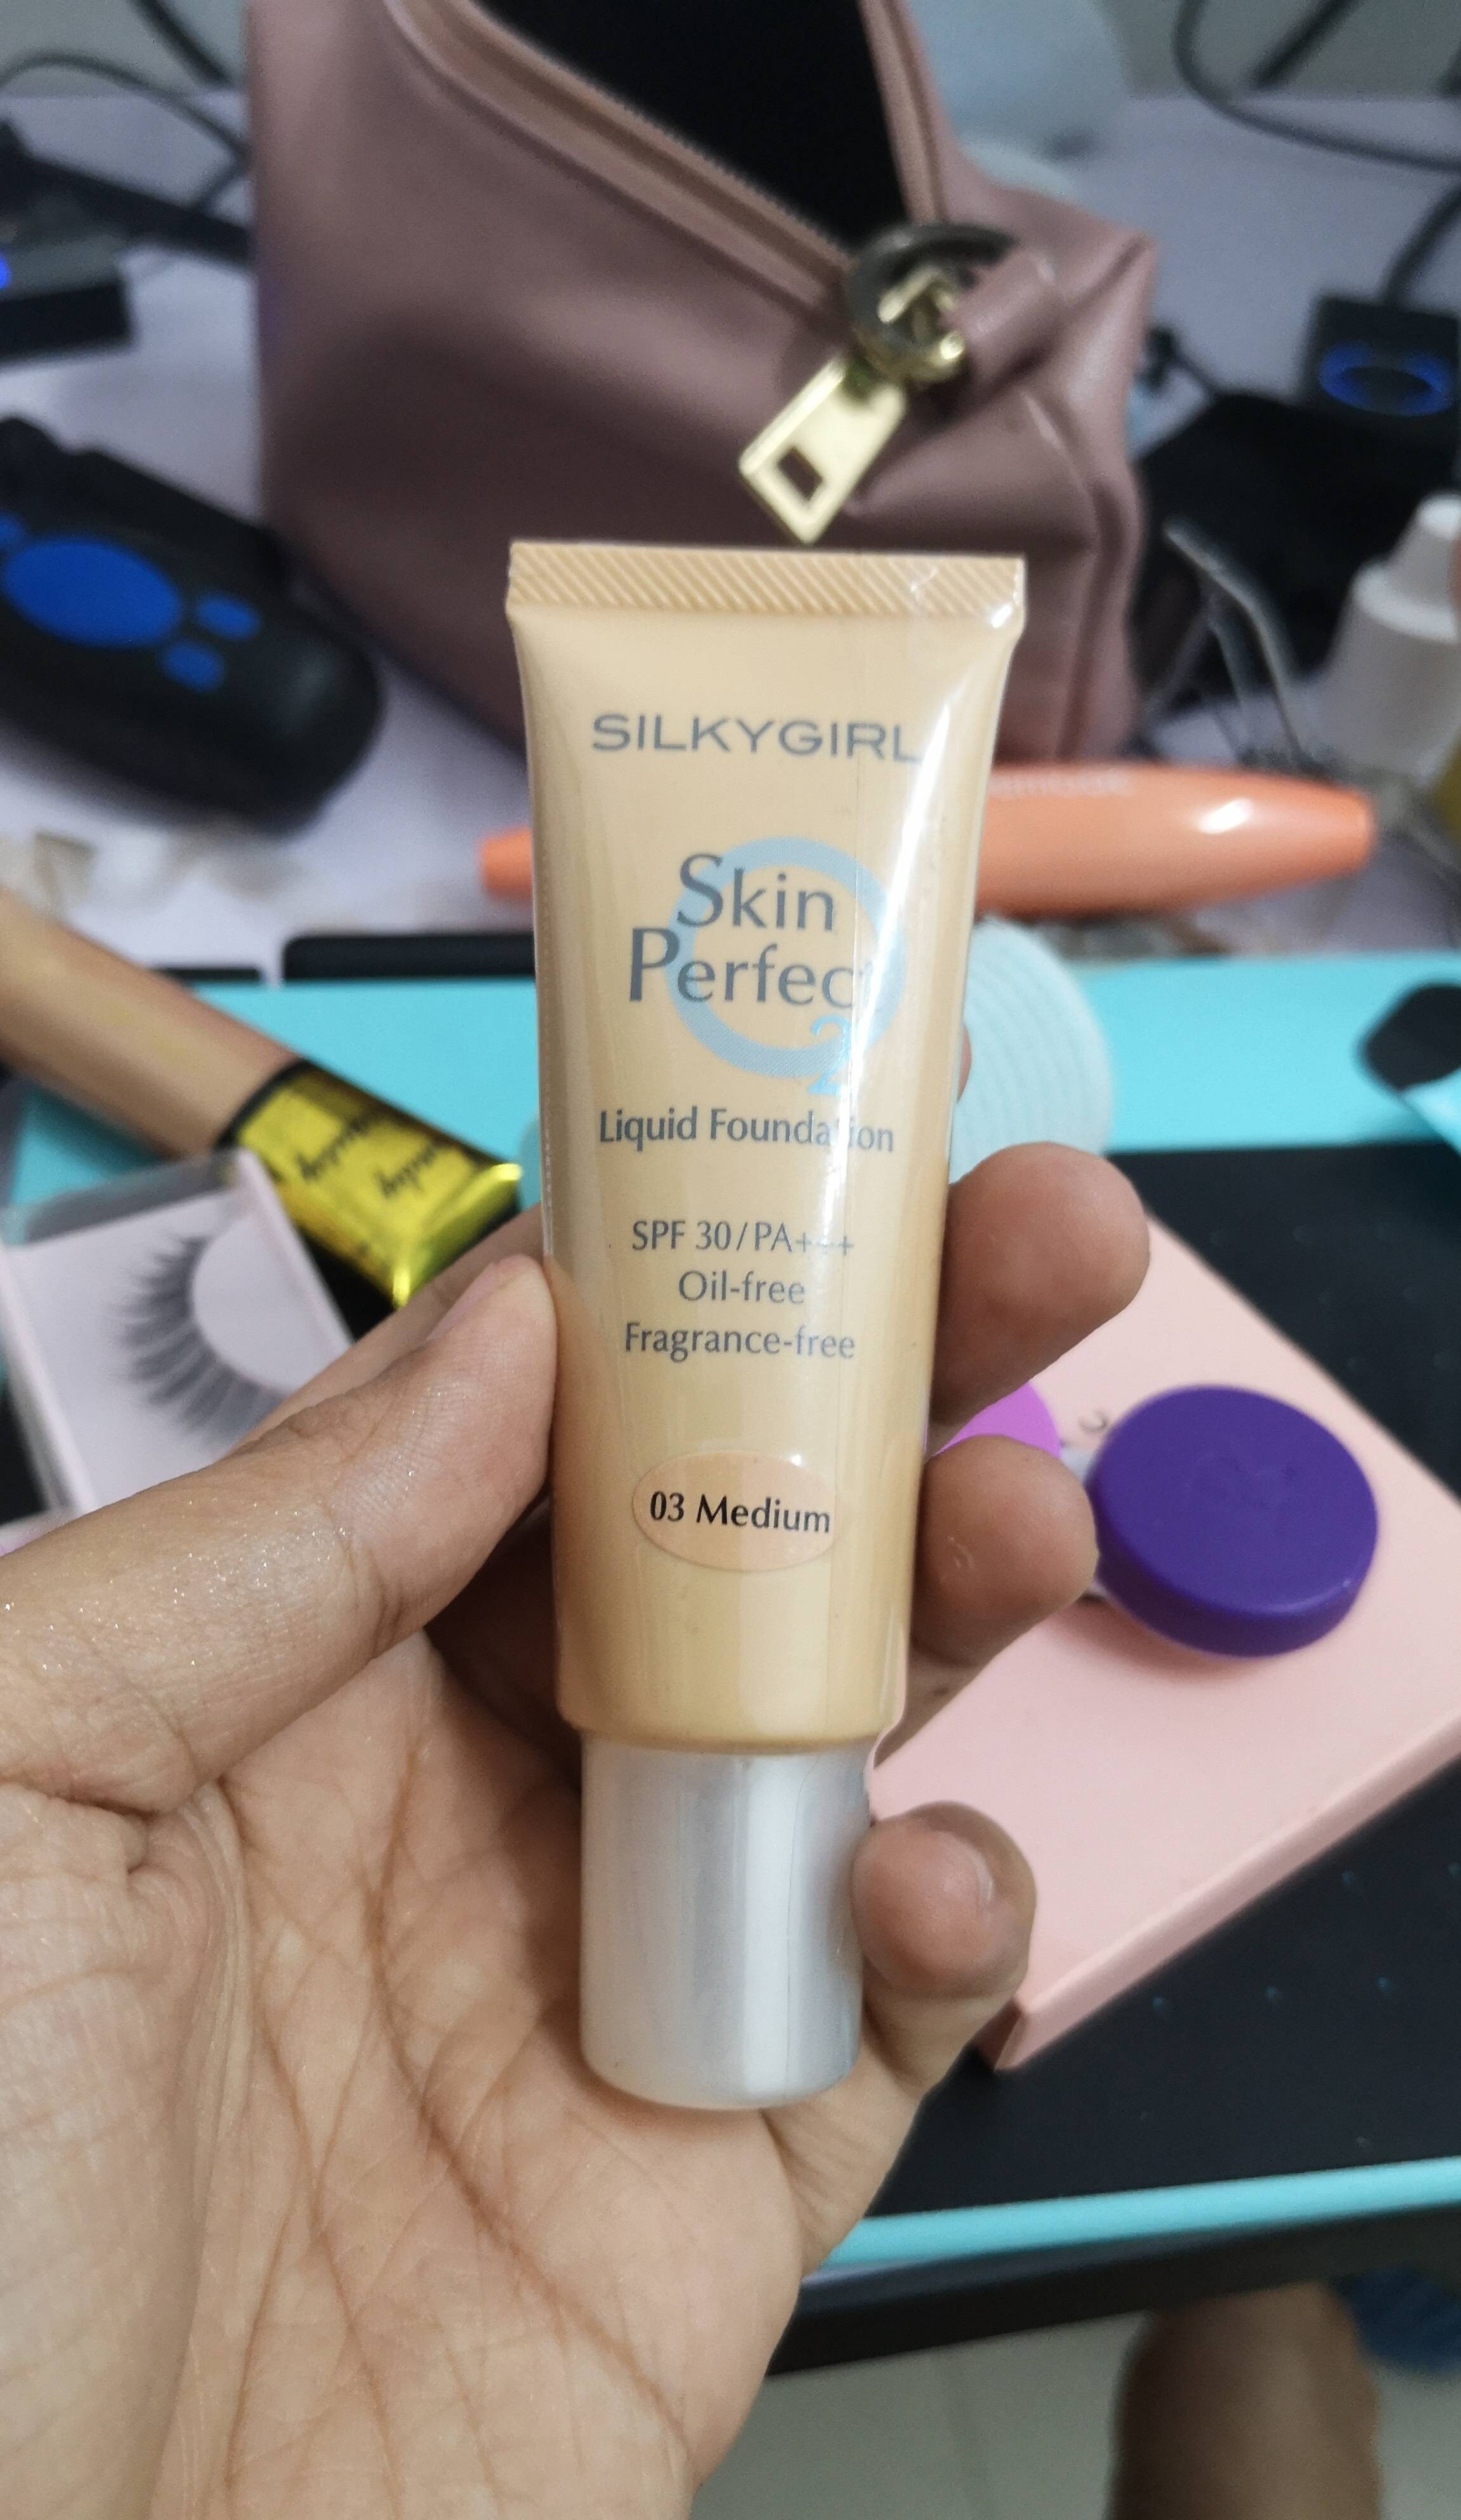 Silkygirl Skin Perfect Liquid Foundation - Product - en